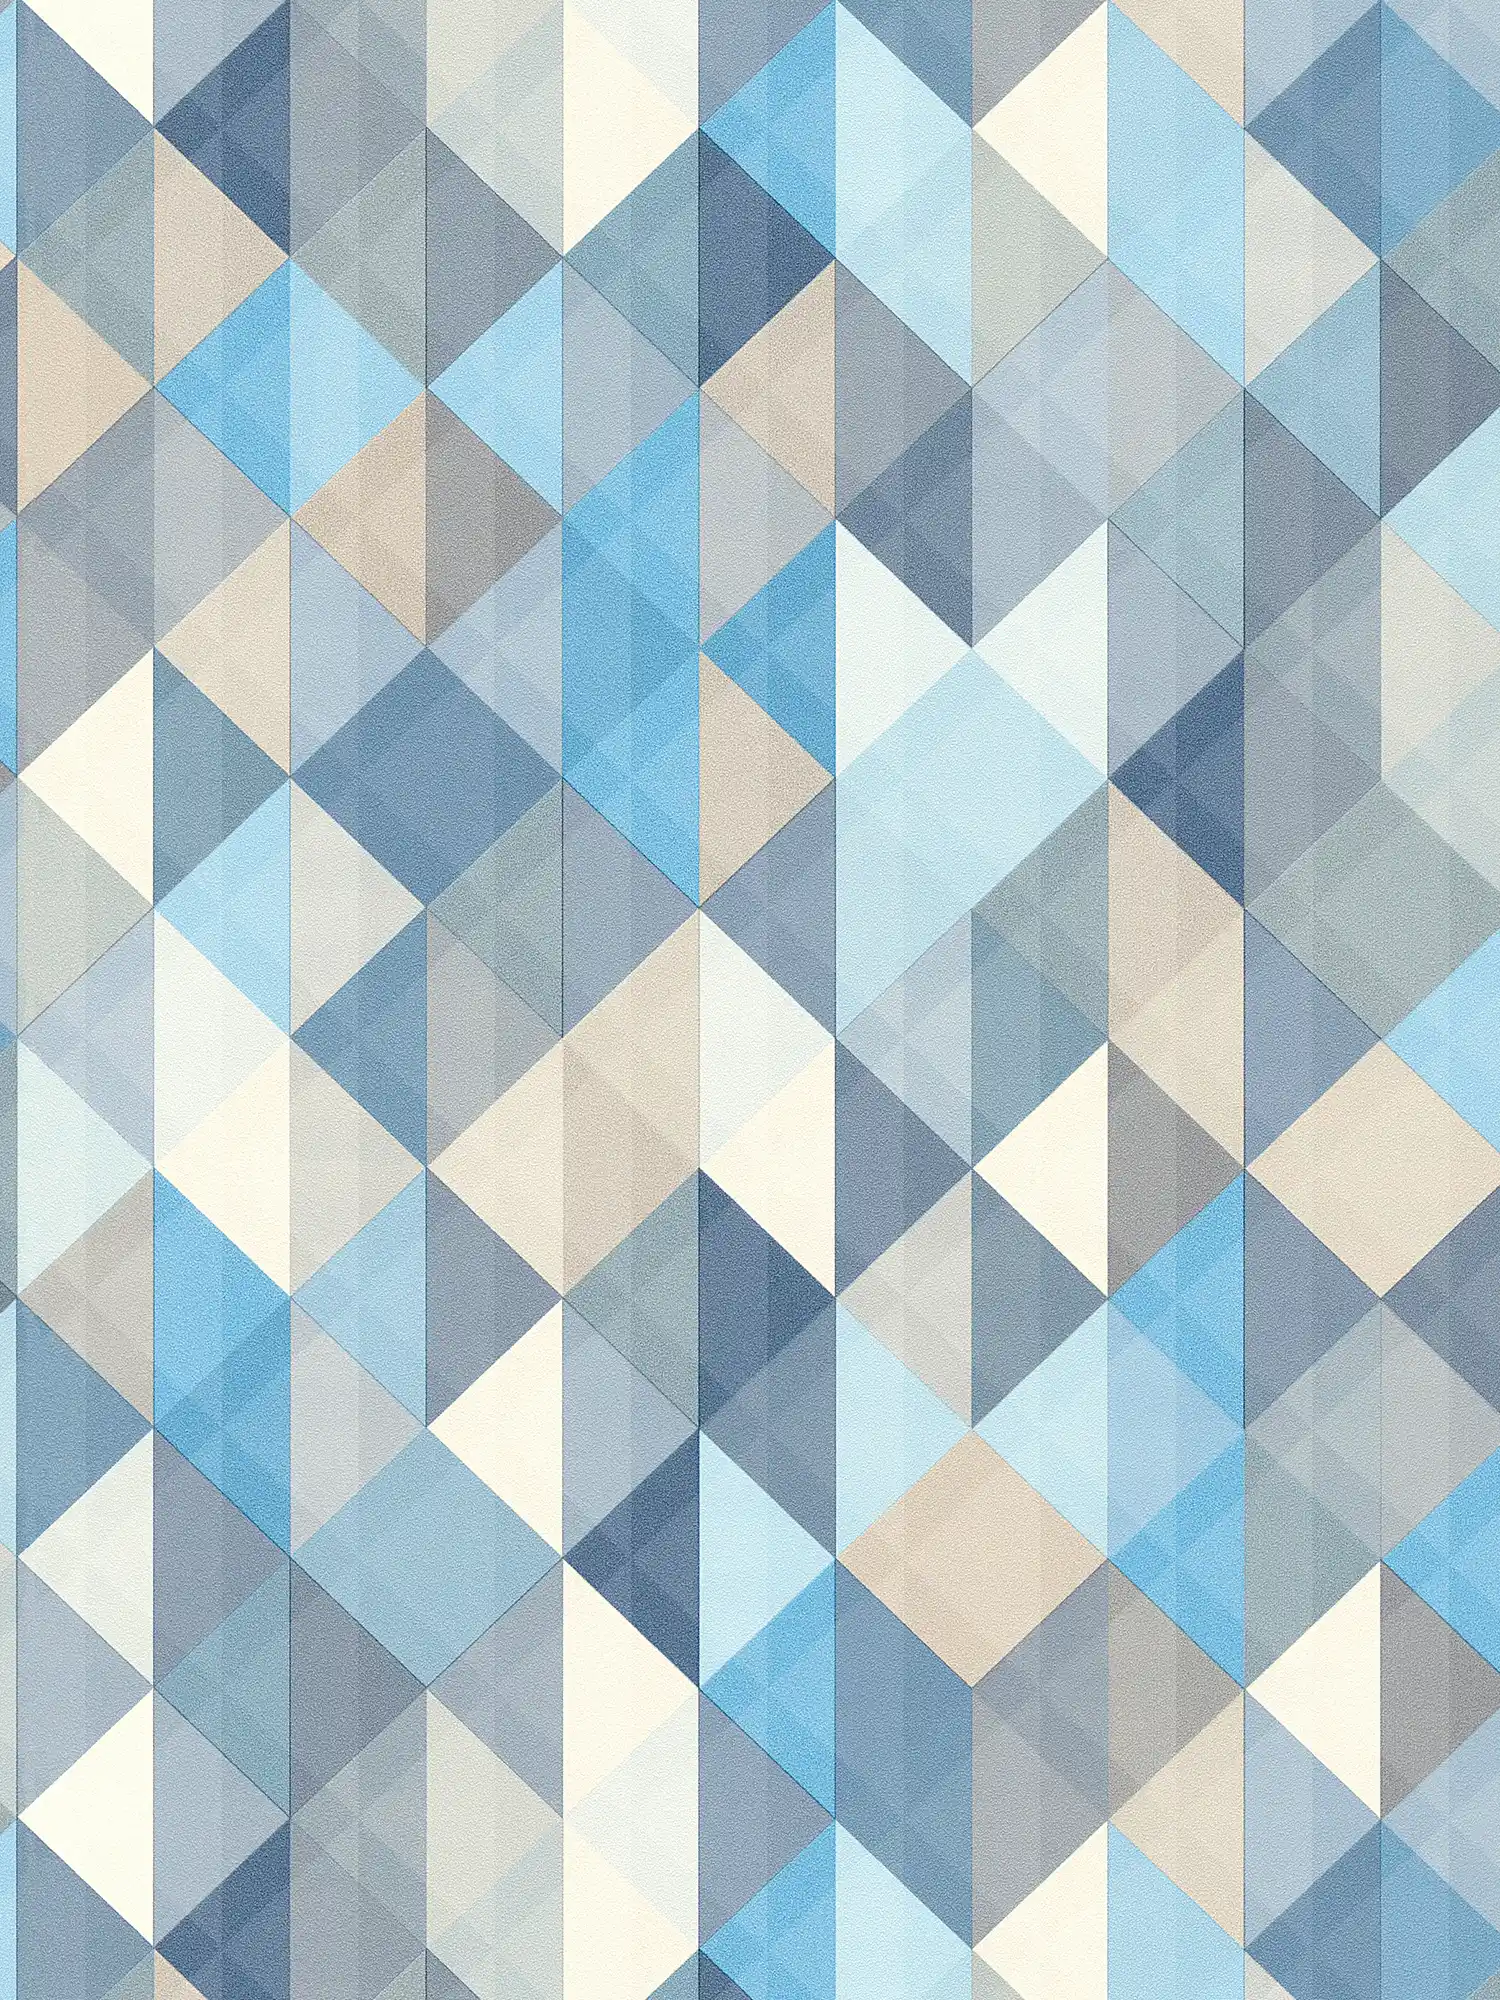 Carta da parati in stile scandinavo con motivi geometrici - blu, grigio, beige
